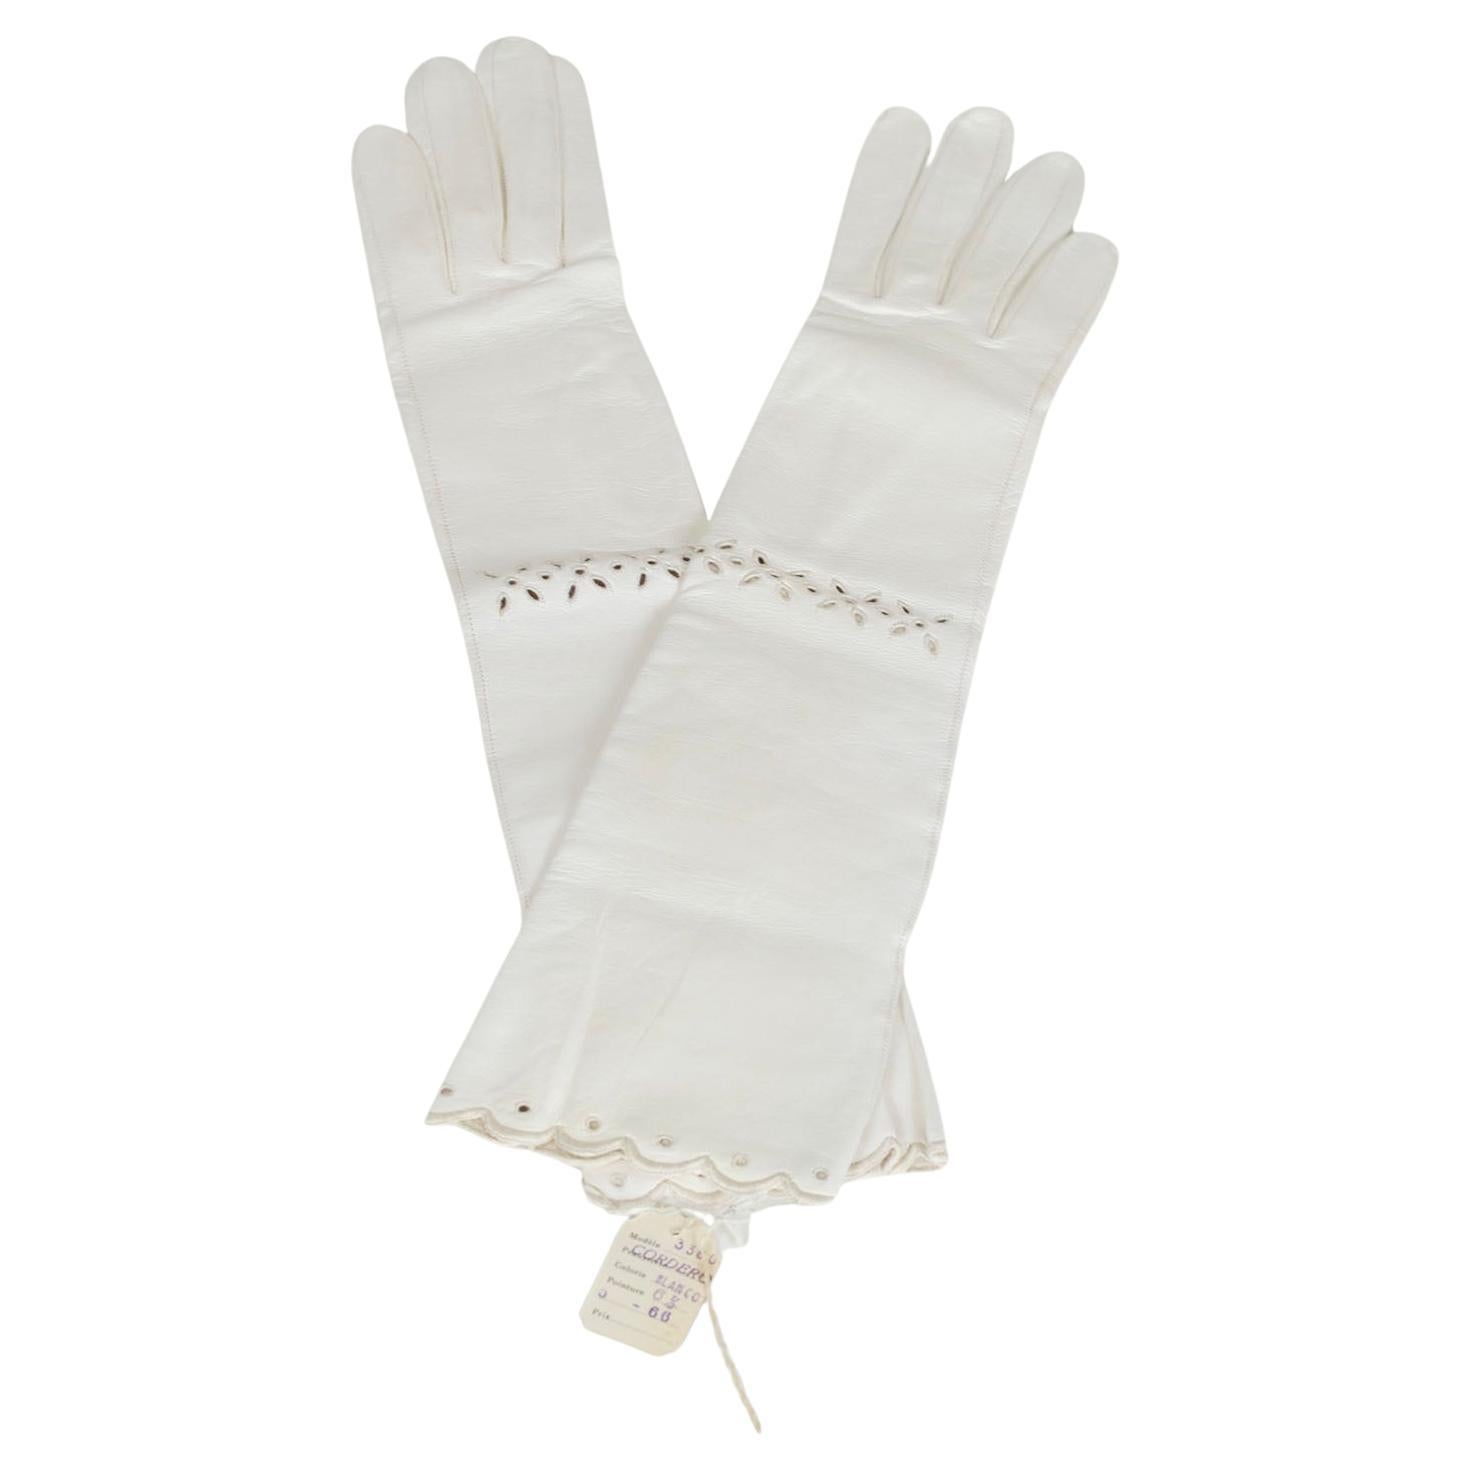 New Christian Dior White Kidskin Elbow Gloves w Eyelets, Orig Pkg - XS-S, 1950s